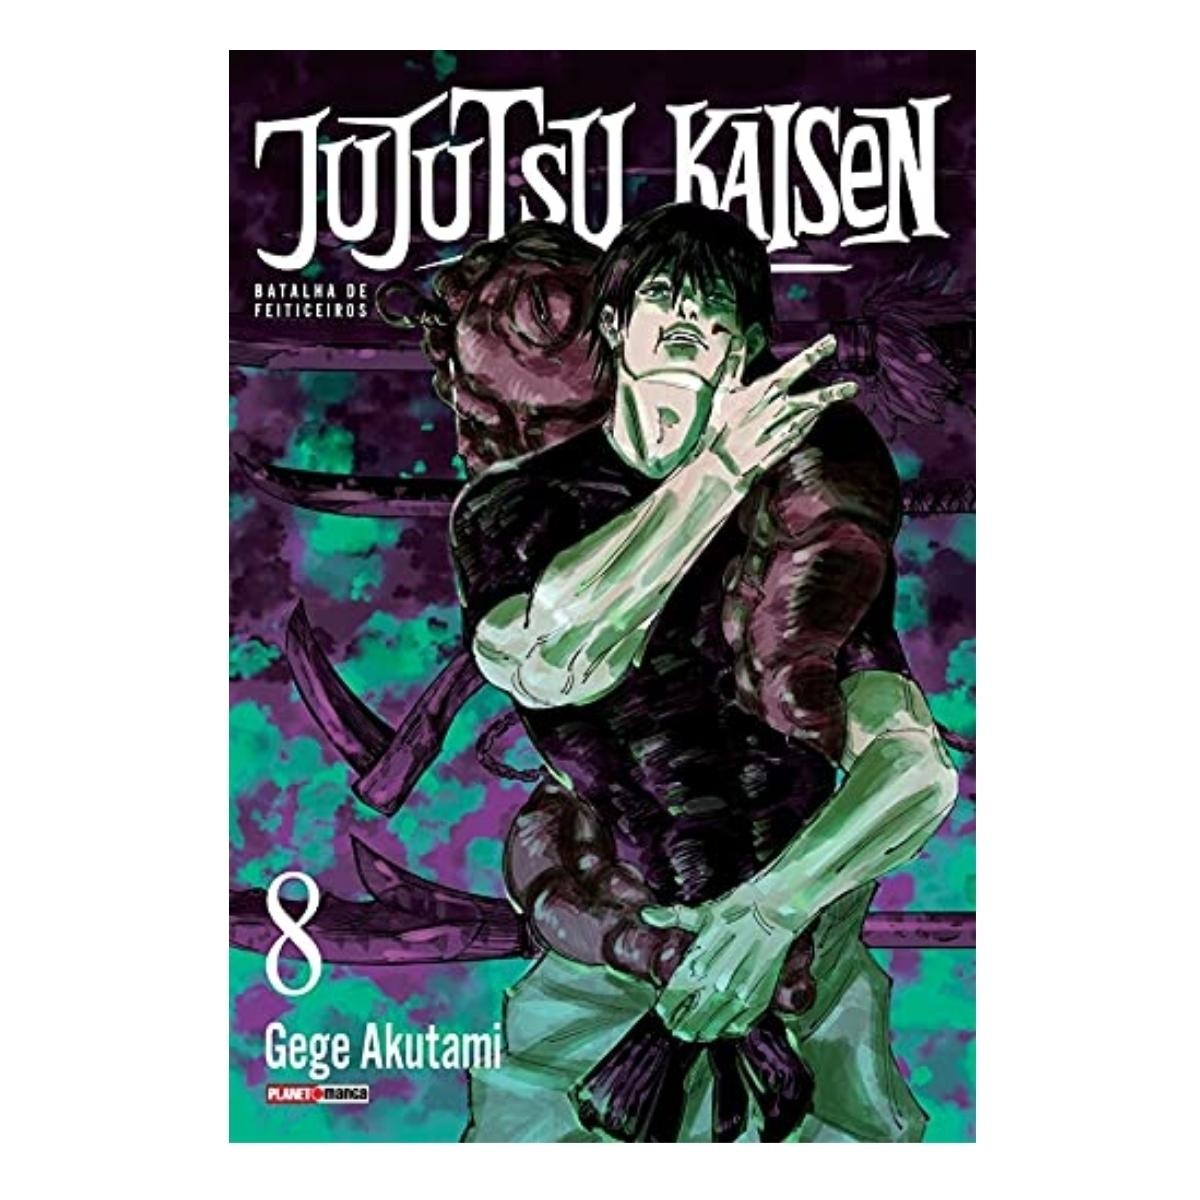 Jujutsu Kaisen:Batalha de Feiticeiros Vol.8 - Por: Gege Akutami - Mangá - Panini